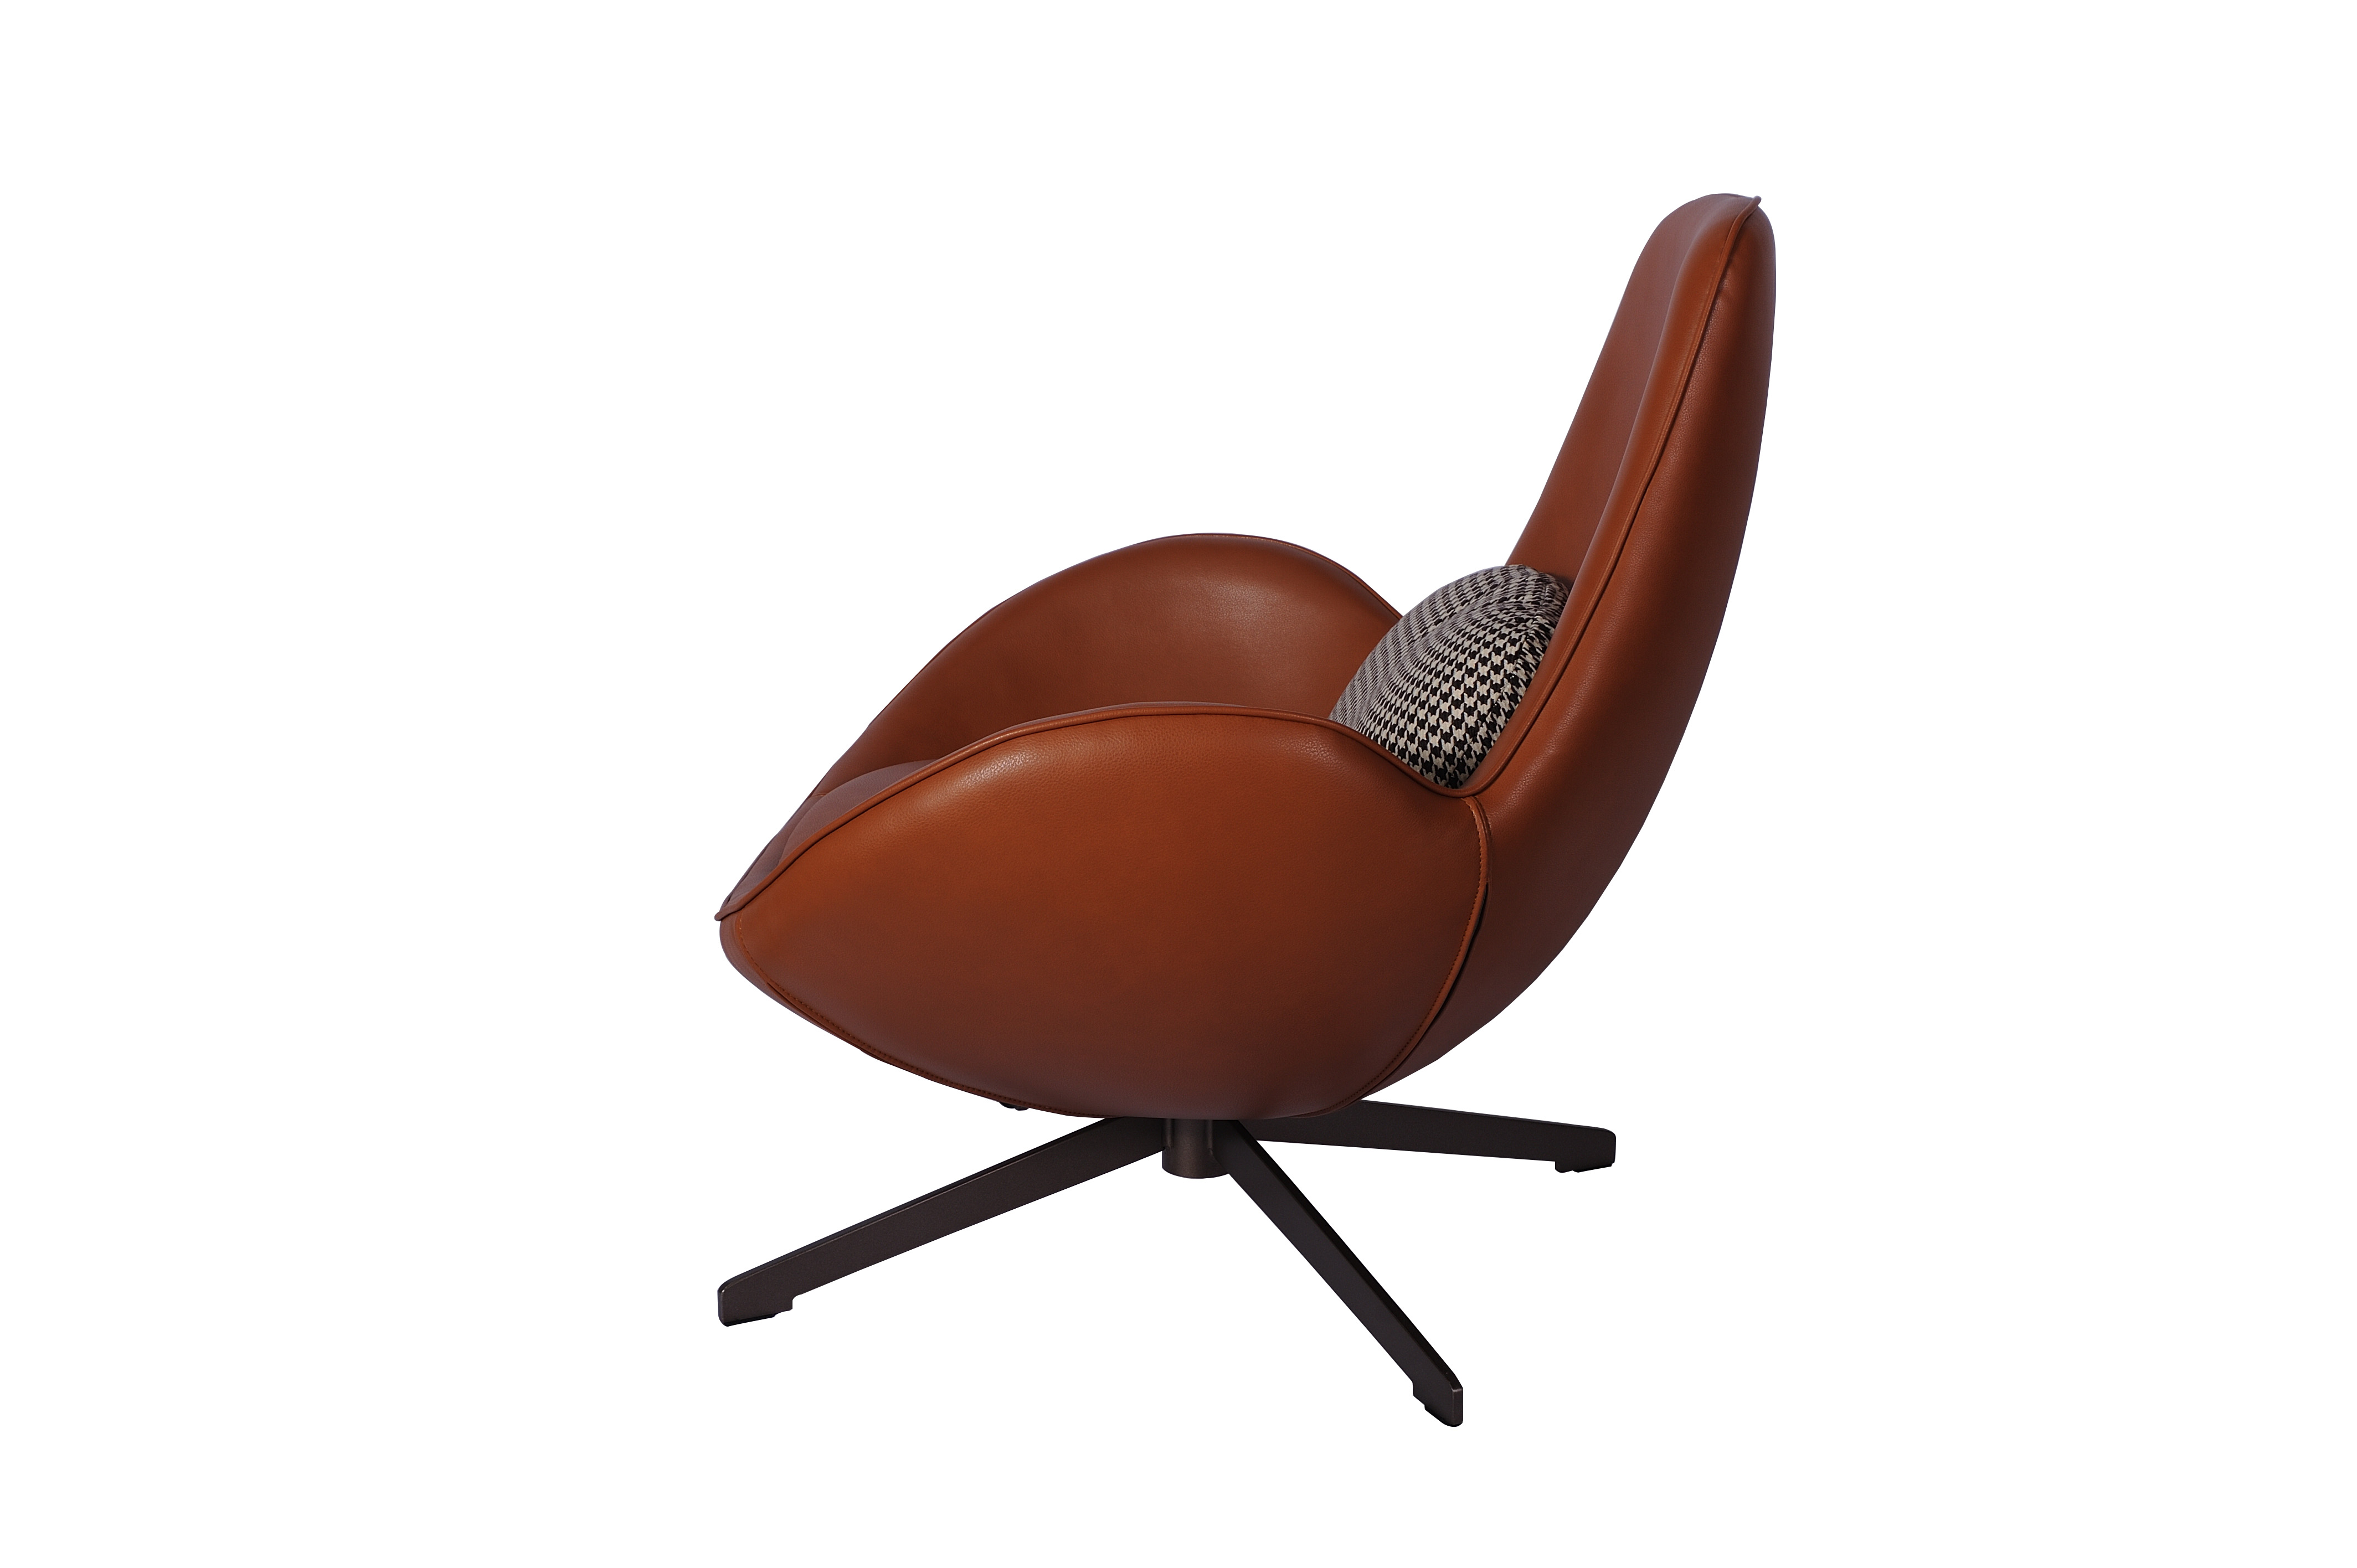 Tengye TENGYE modern fashion trend leather art egg chair personality creative leisure chair DY-15